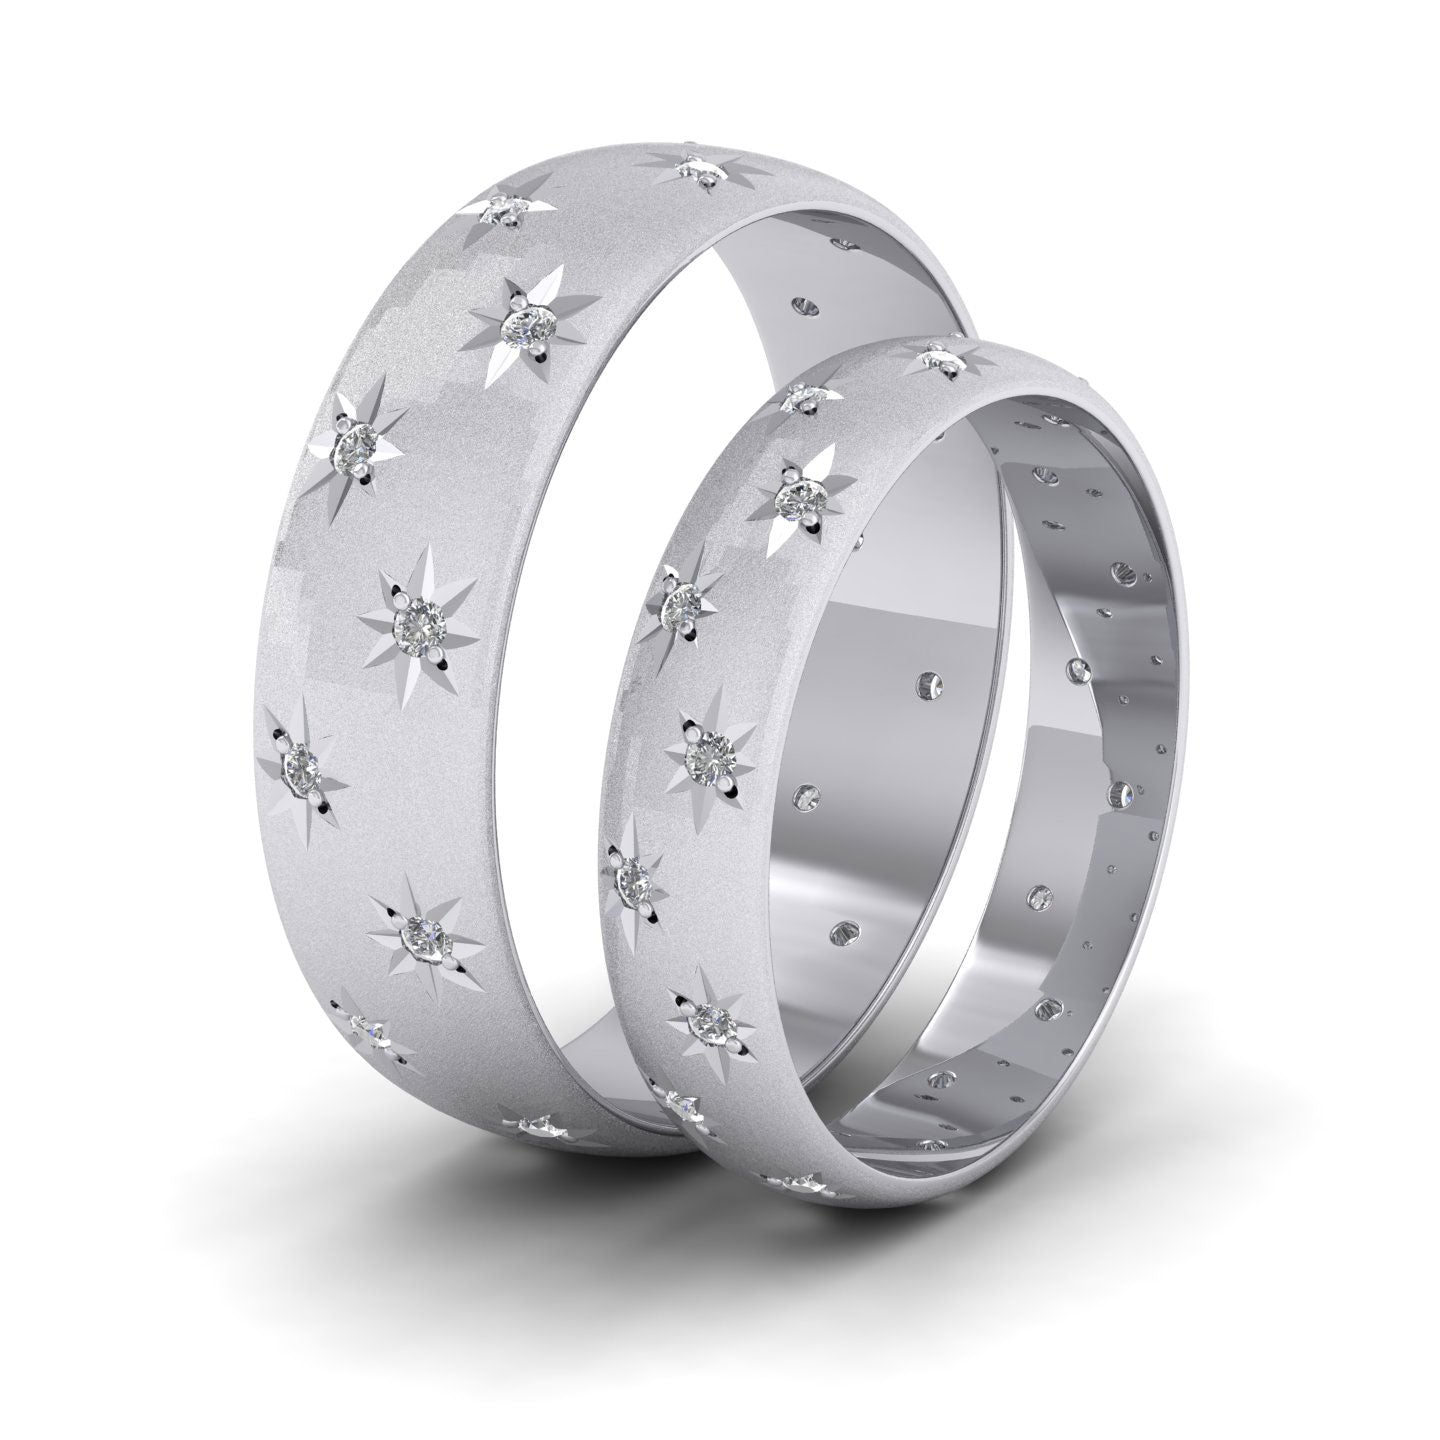 Star And Diamond Set 950 Palladium 4mm Wedding Ring